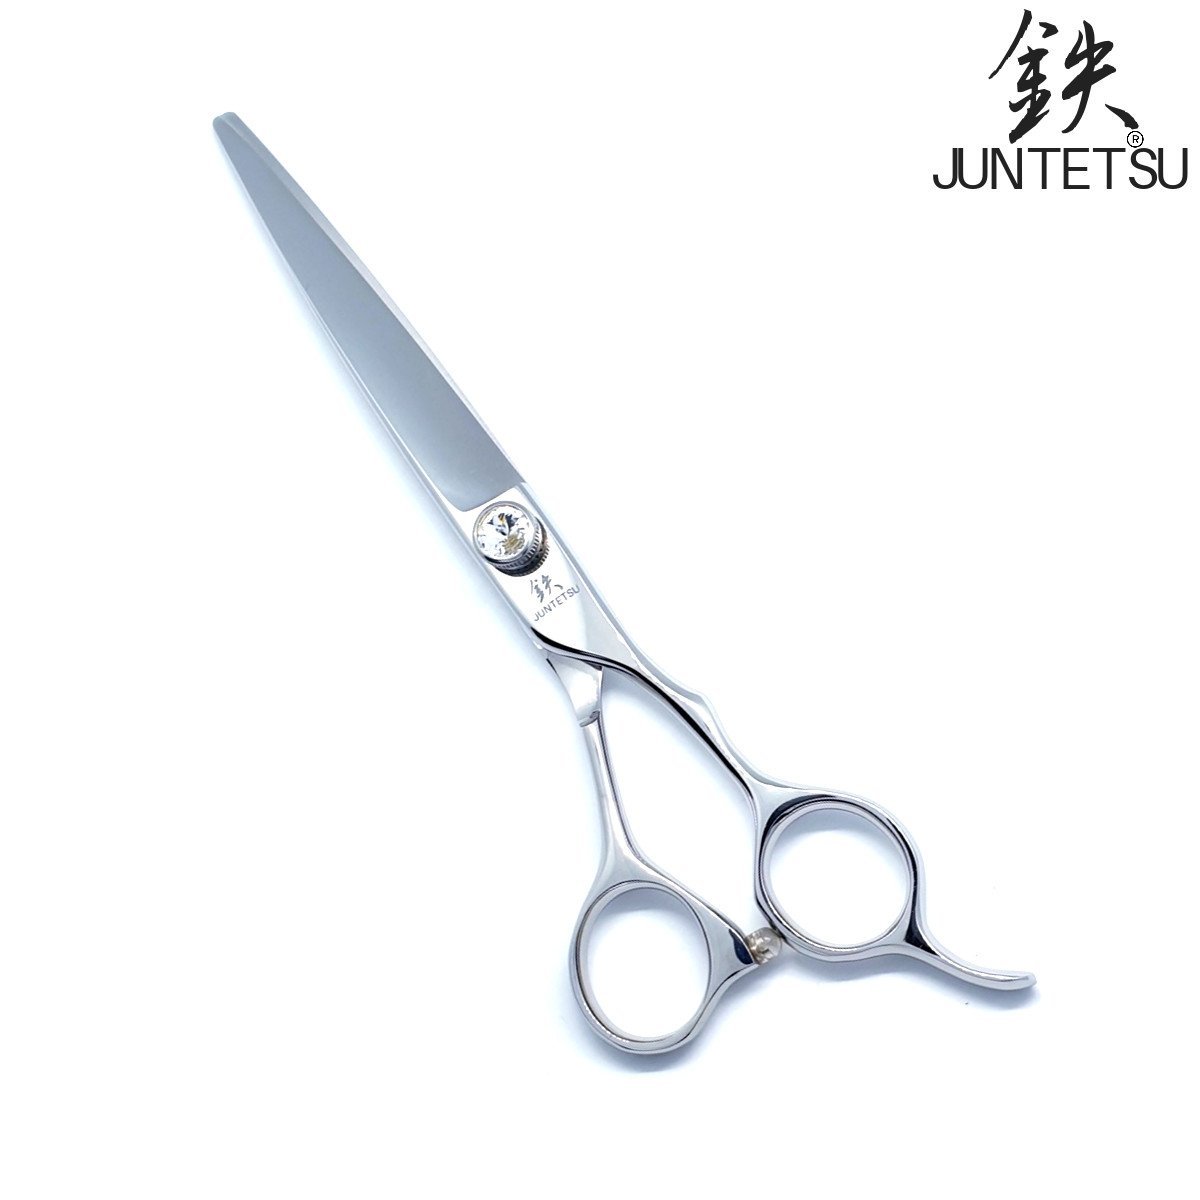 Juntetsu Snow Hair Cutting Scissors